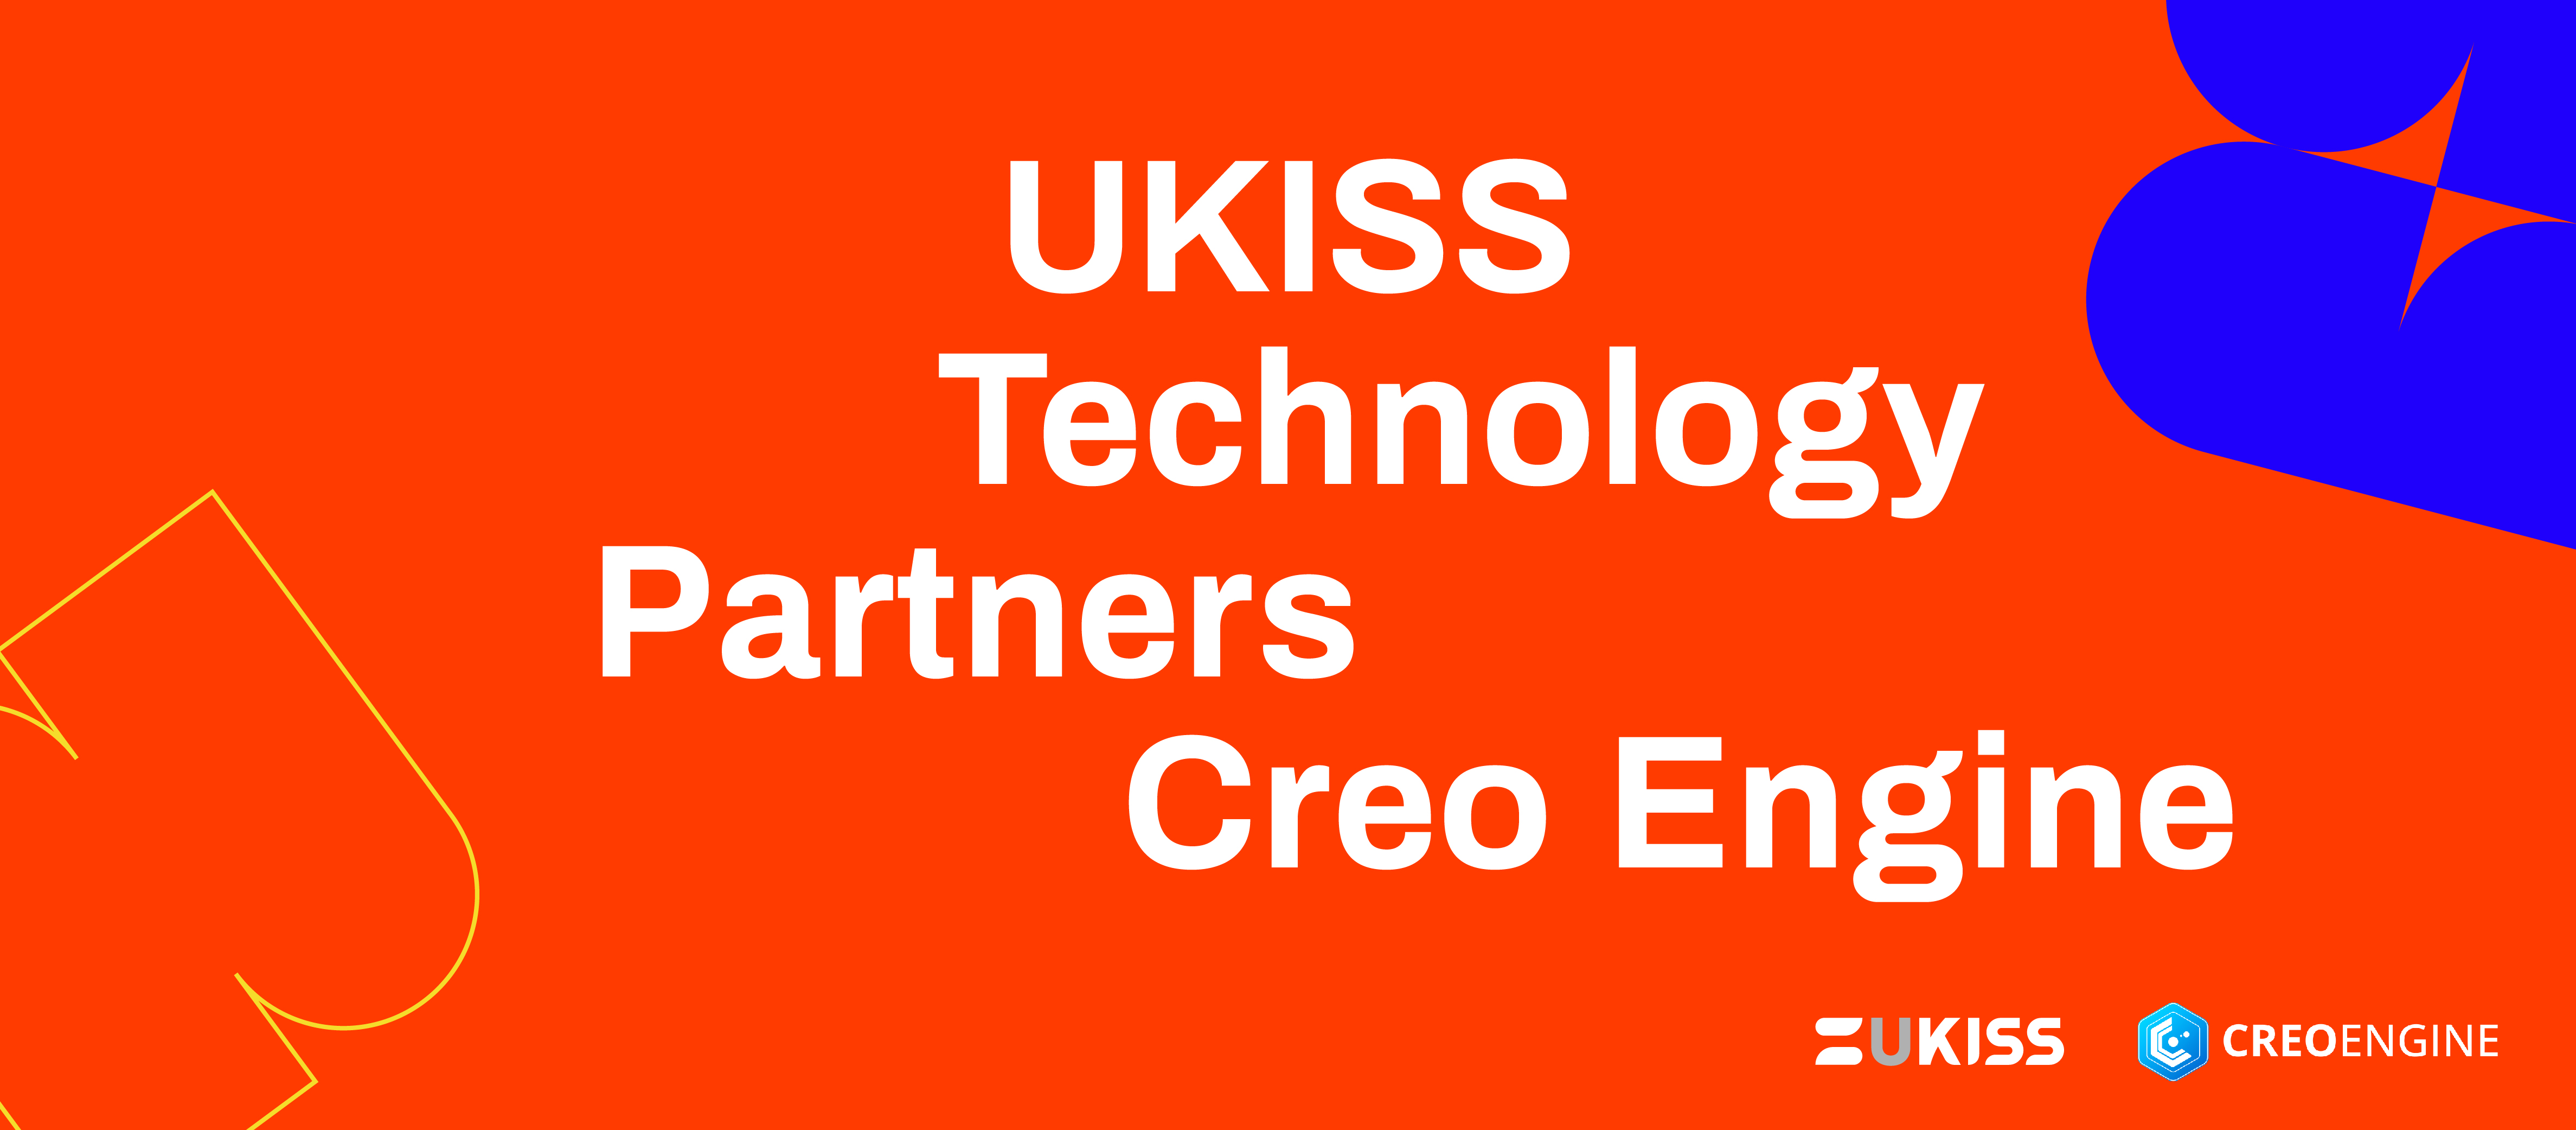 UKISS Technology partners Creo Engine.